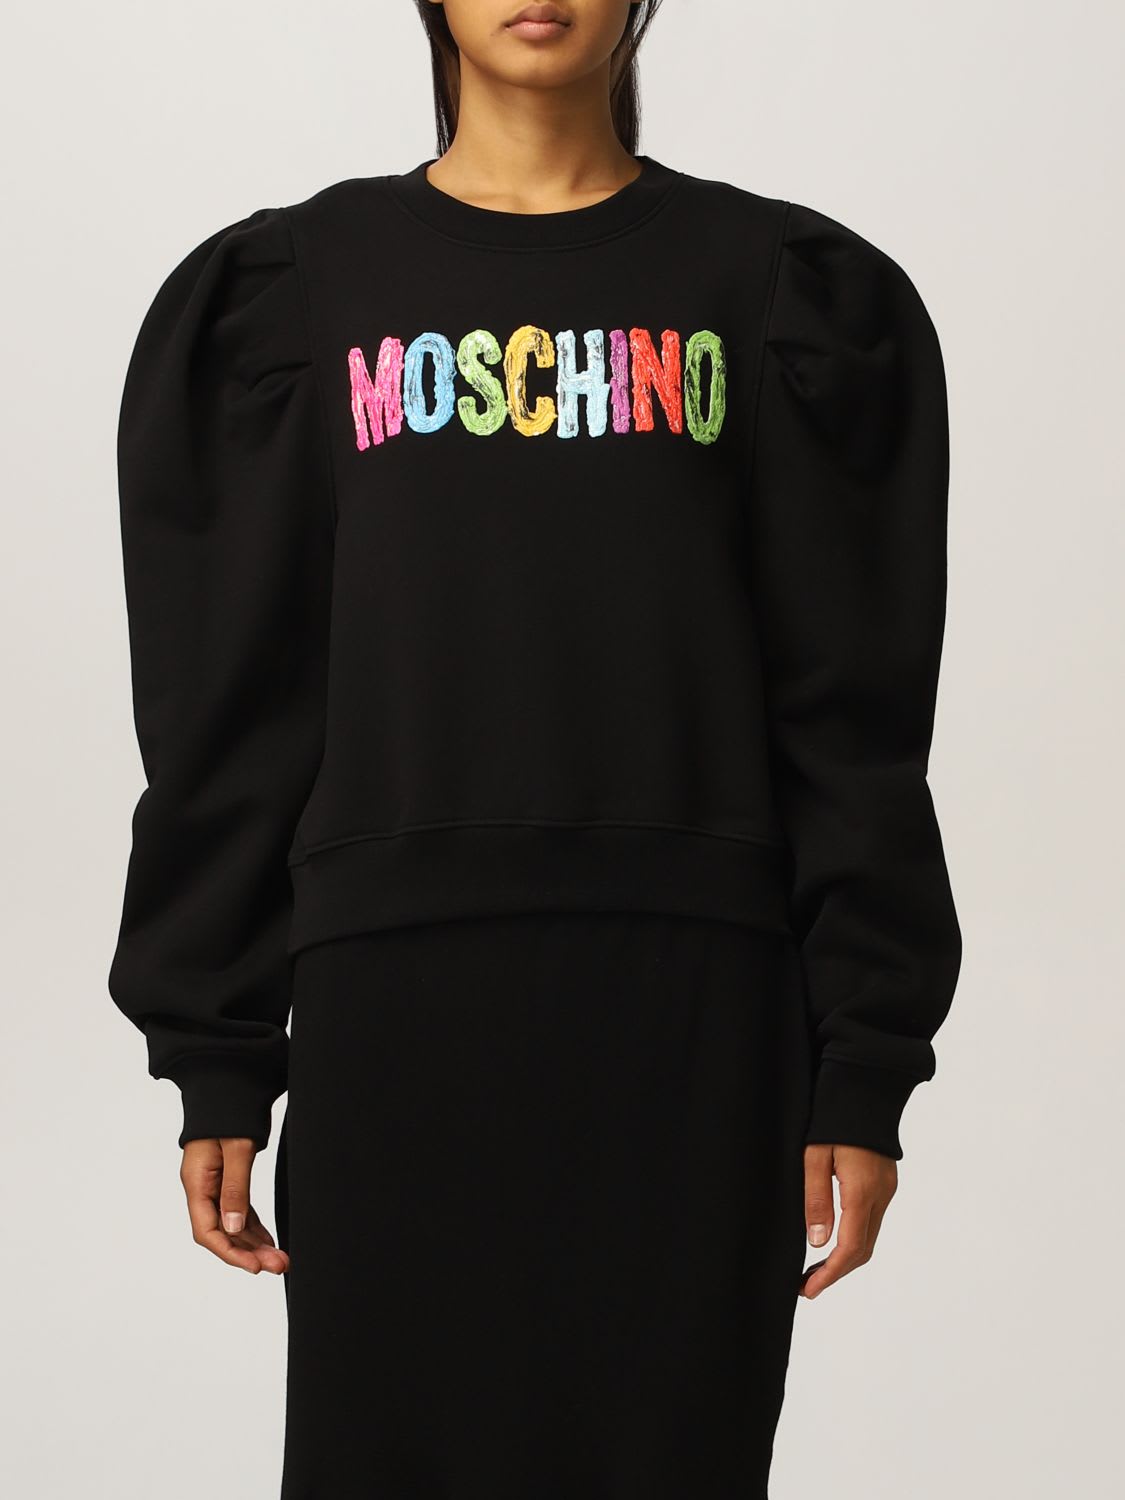 Moschino Couture Sweatshirt Moschino Couture Cotton Sweatshirt With Maxi Sleeves